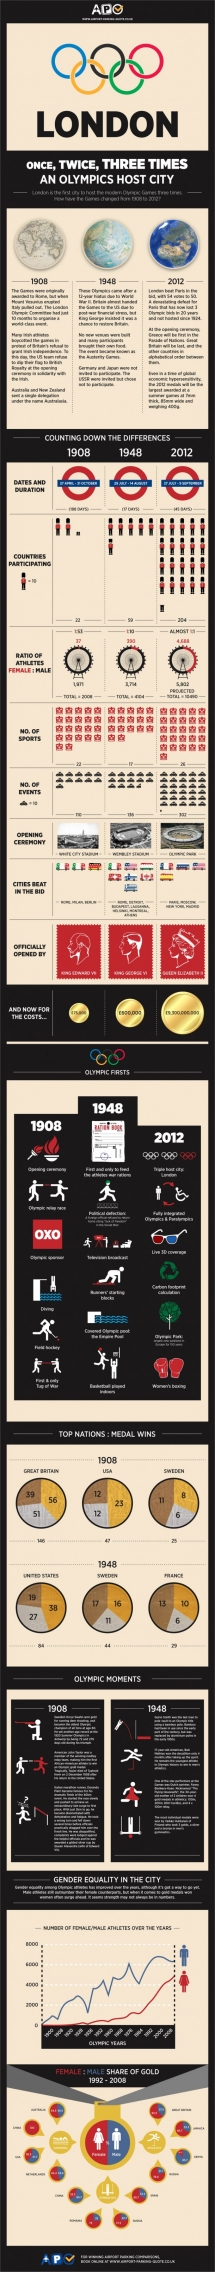 London Olympics 2012 - Olympic Games 2012